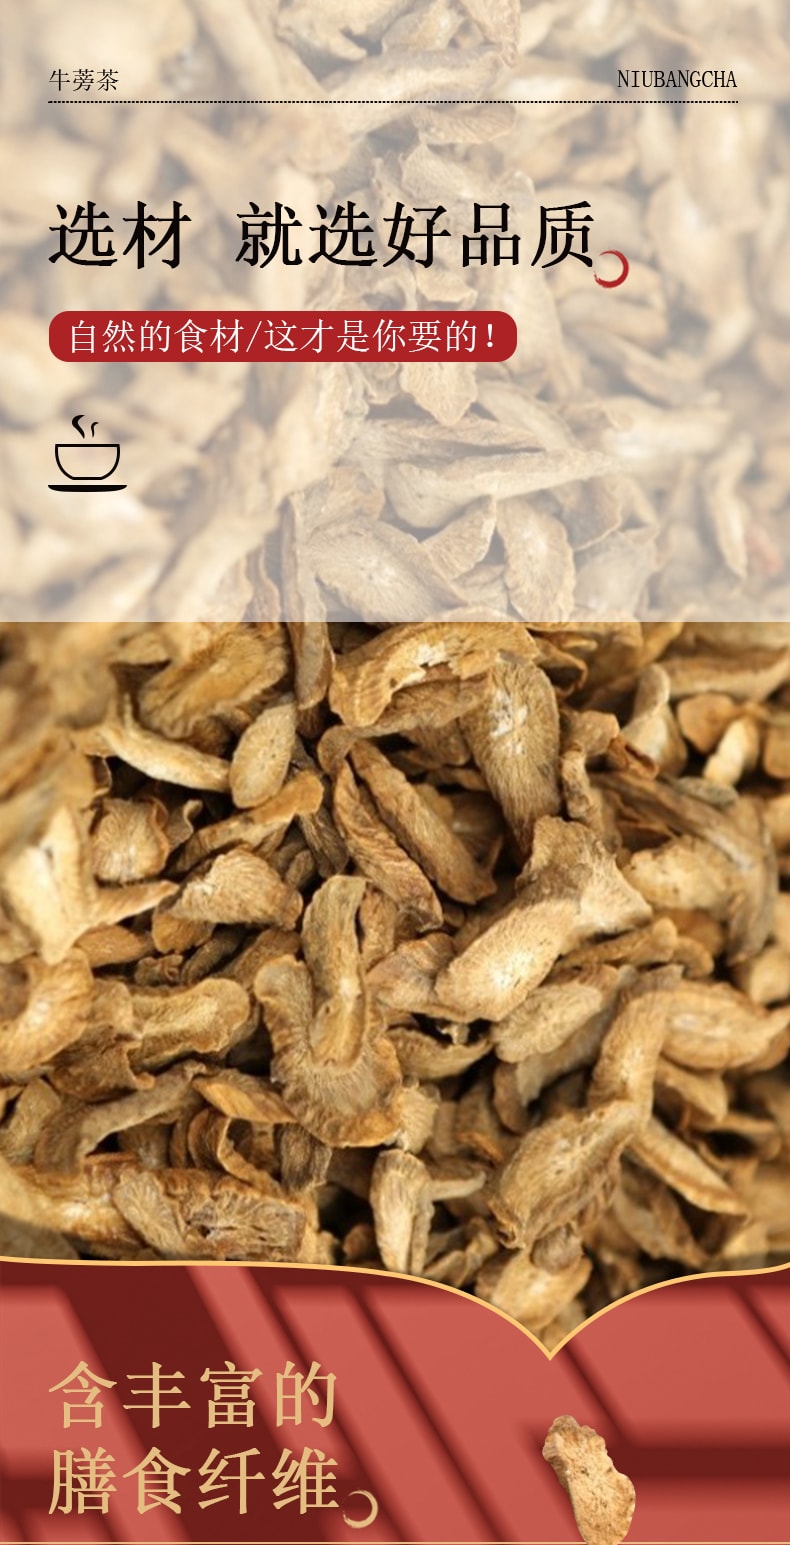 Beijing Tong Ren Tang Dried Burdock Root for Make Tea or Cook 170g